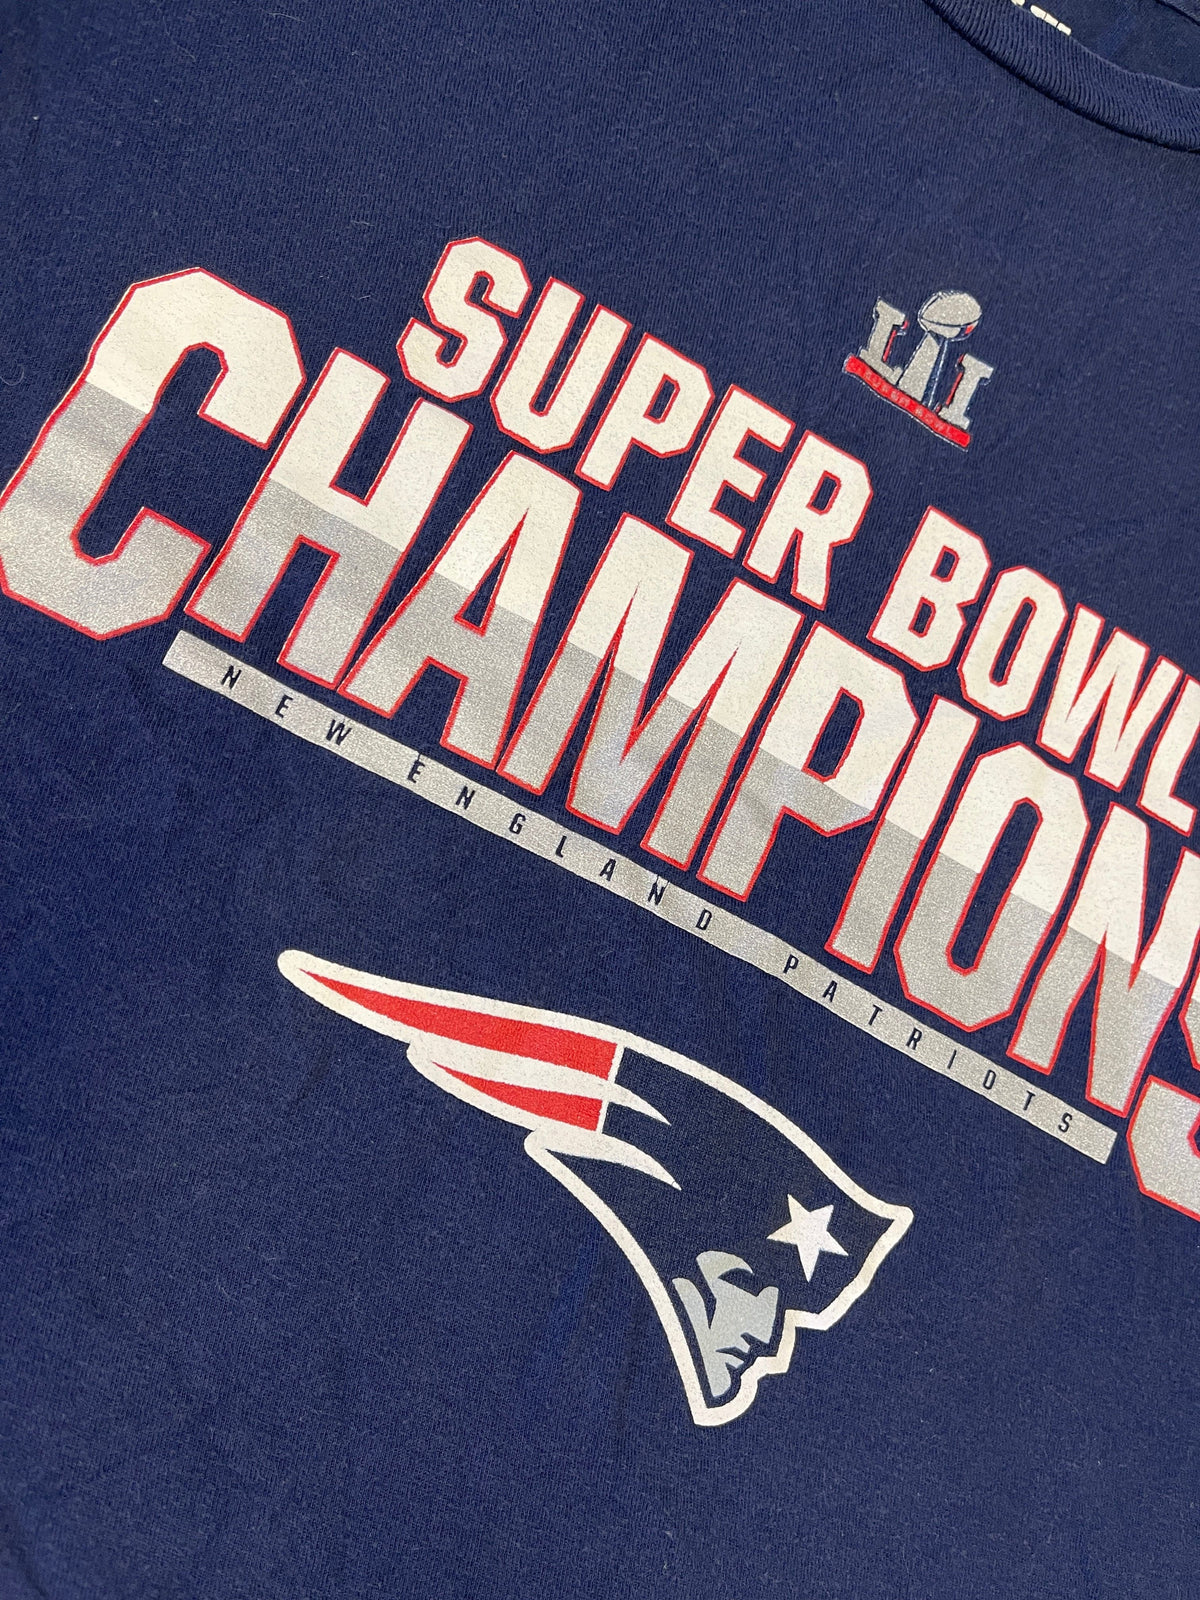 NFL New England Patriots Super Bowl LI Champions T-Shirt Youth Medium